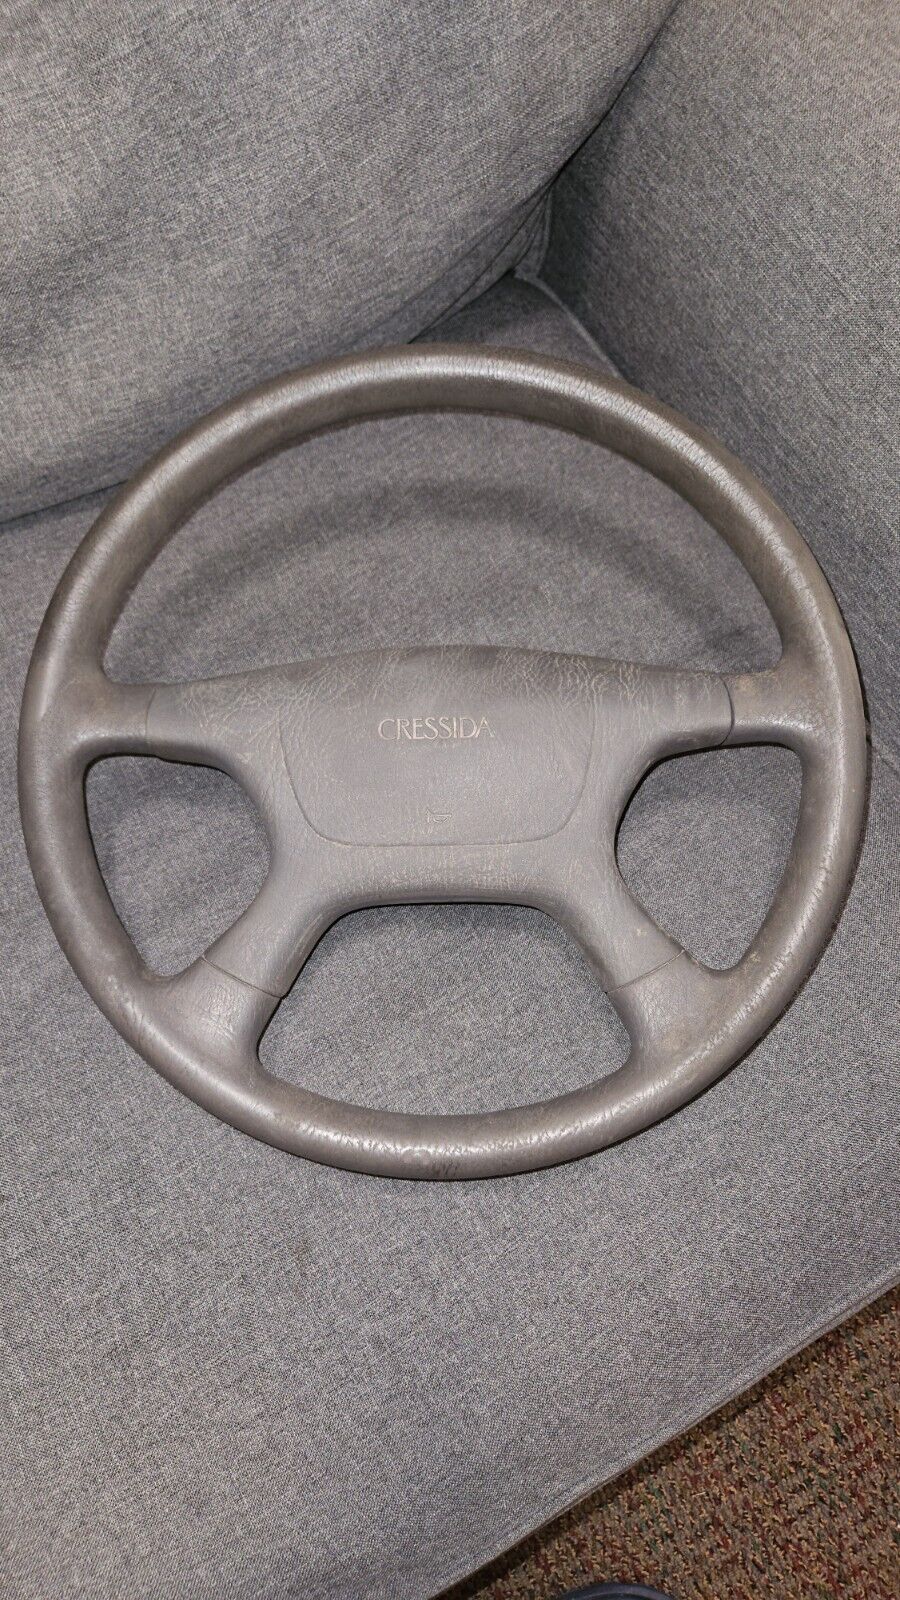 1989-92 OEM Toyota Cressida Steering Wheel w/horn cover